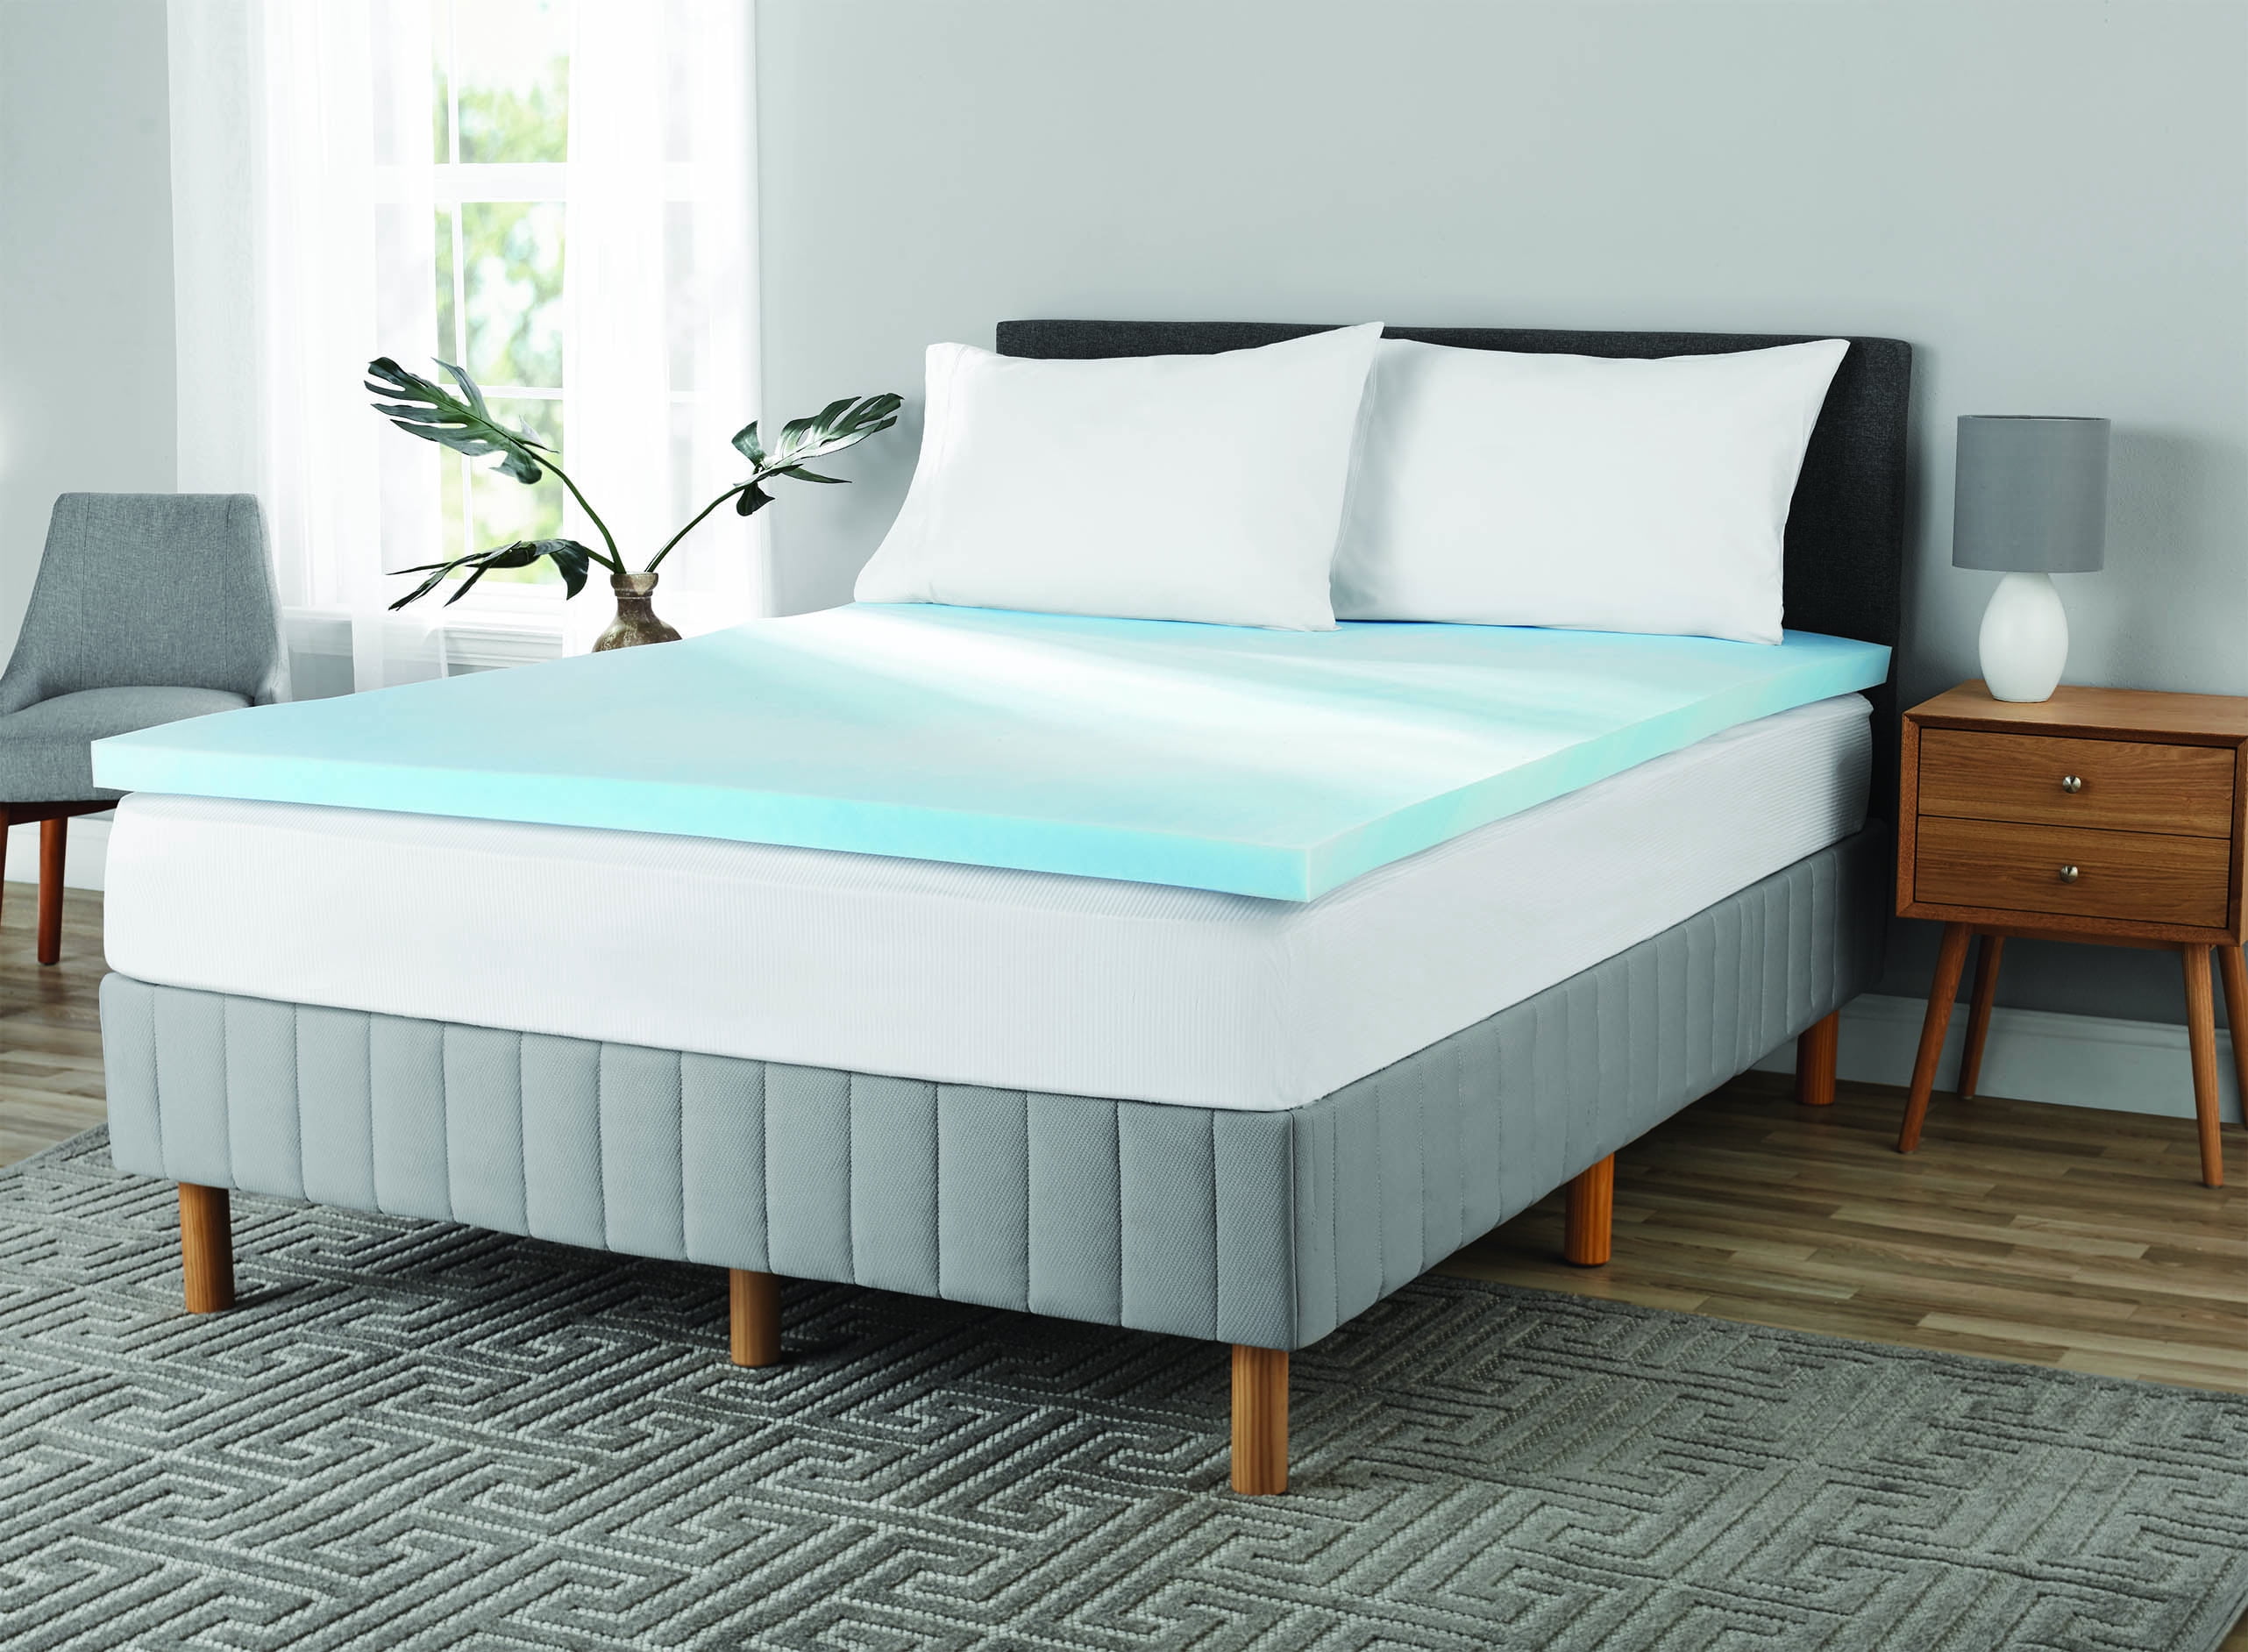 Best Of 60+ Stunning best foam mattress bed frame For Every Budget